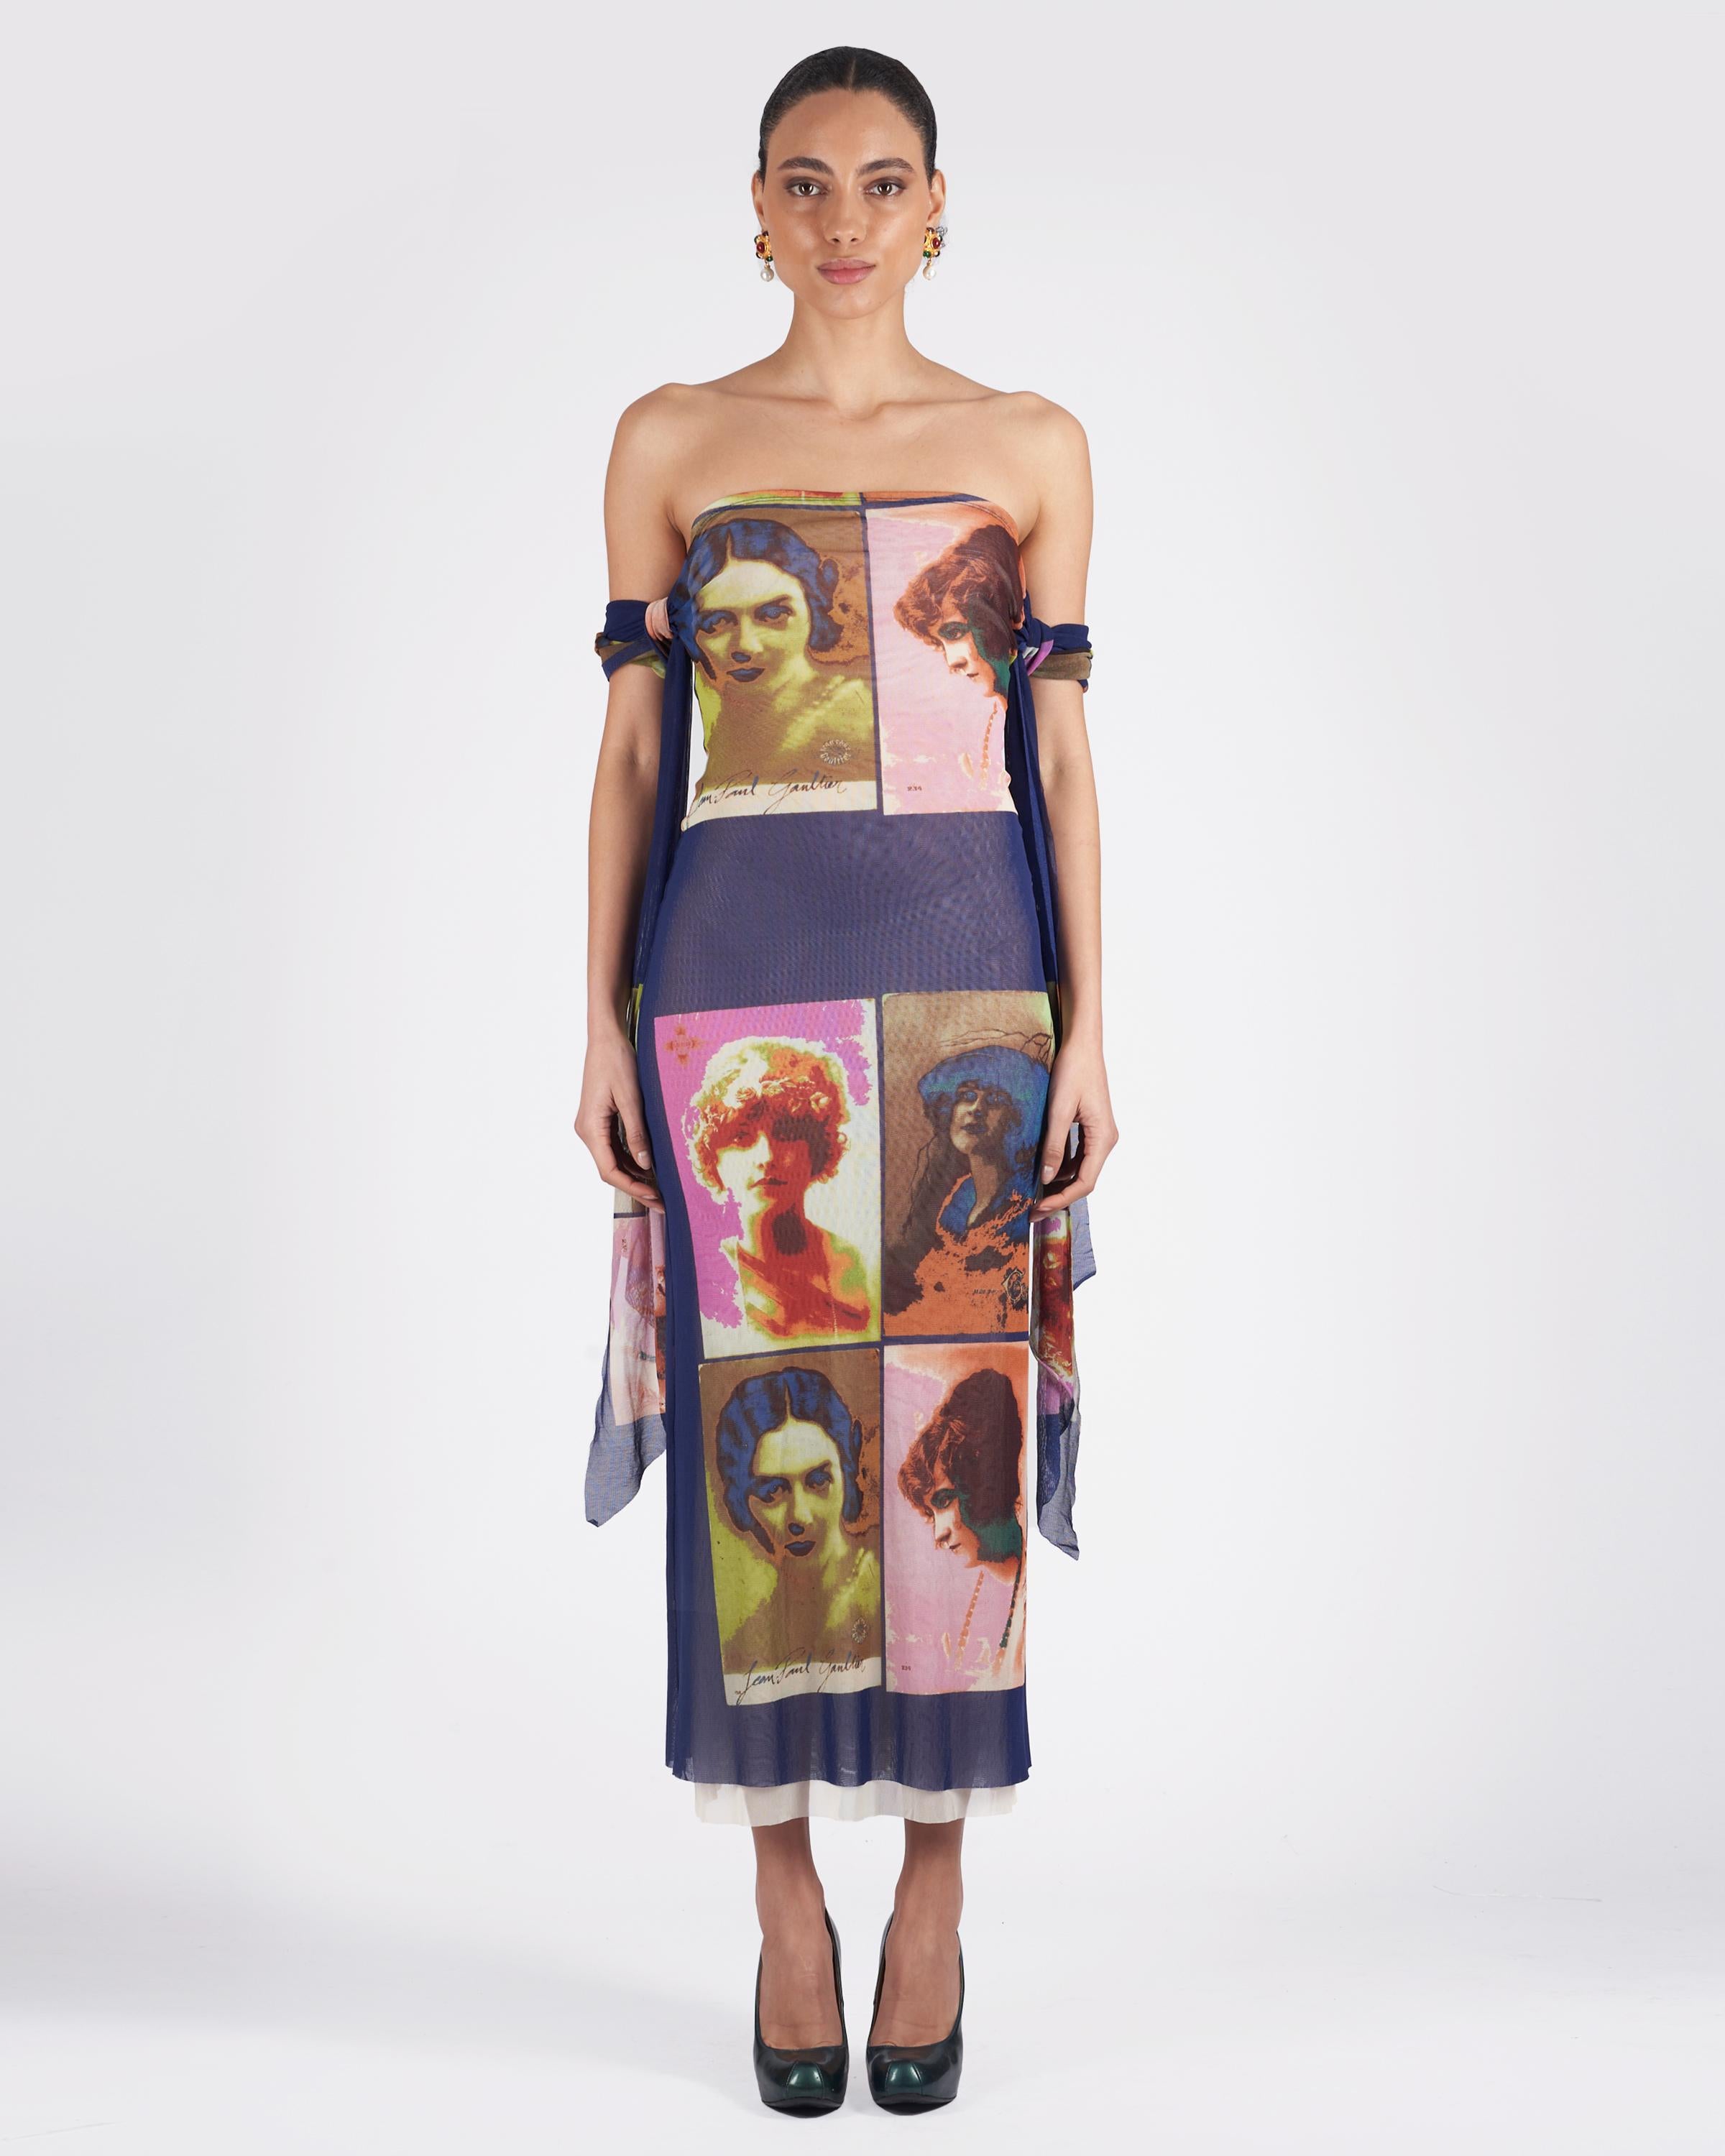 Jean Paul Gaultier S/S 2002 Portrait Dress For Sale 2